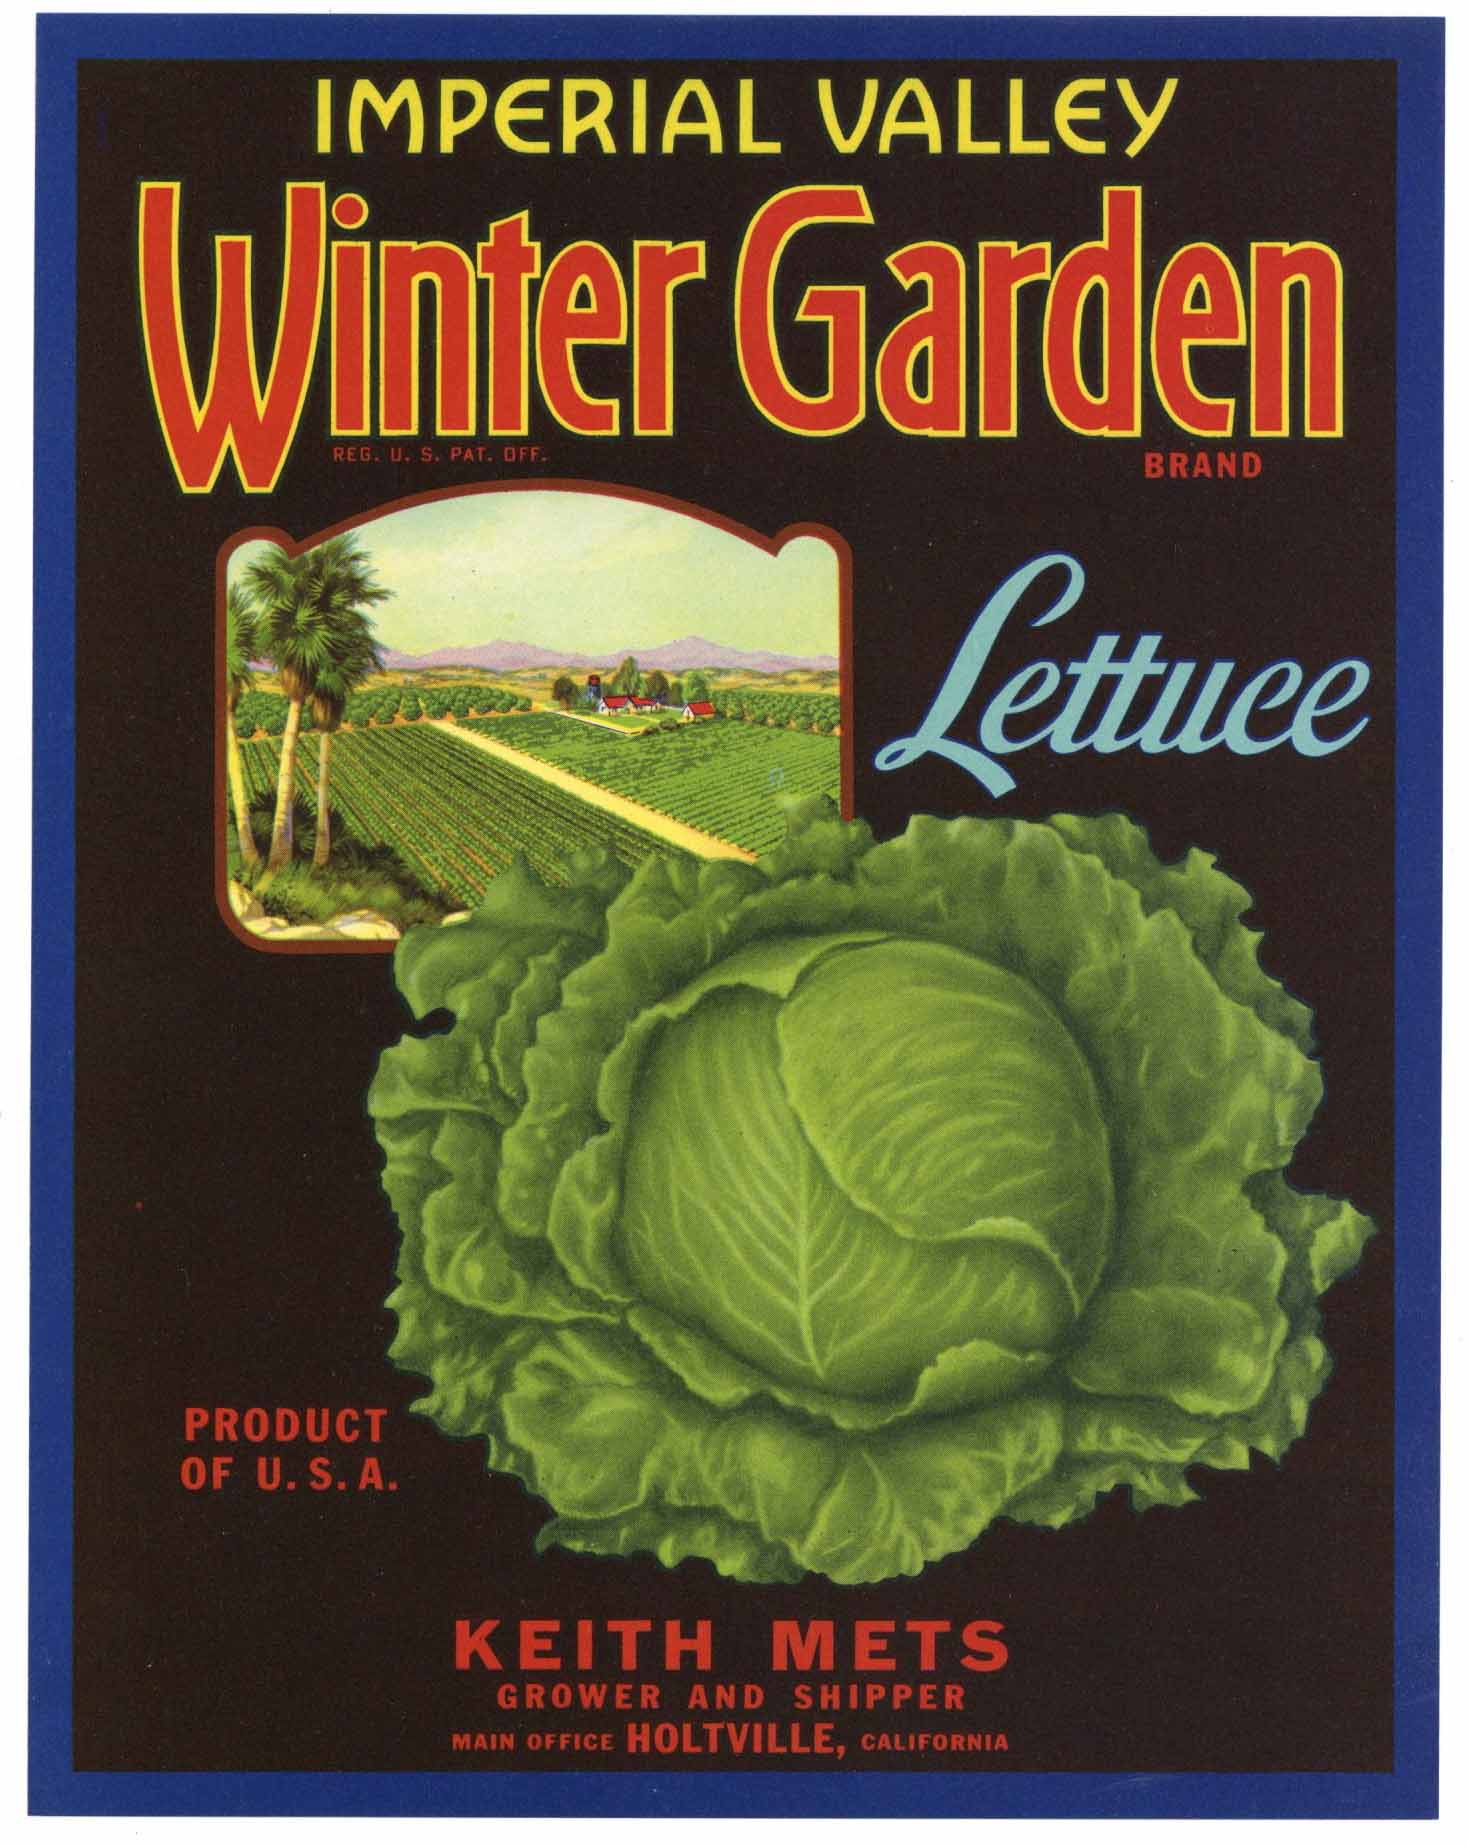 Winter Garden Brand Vintage Imperial Valley Vegetable Crate Label, lettuce, Mets